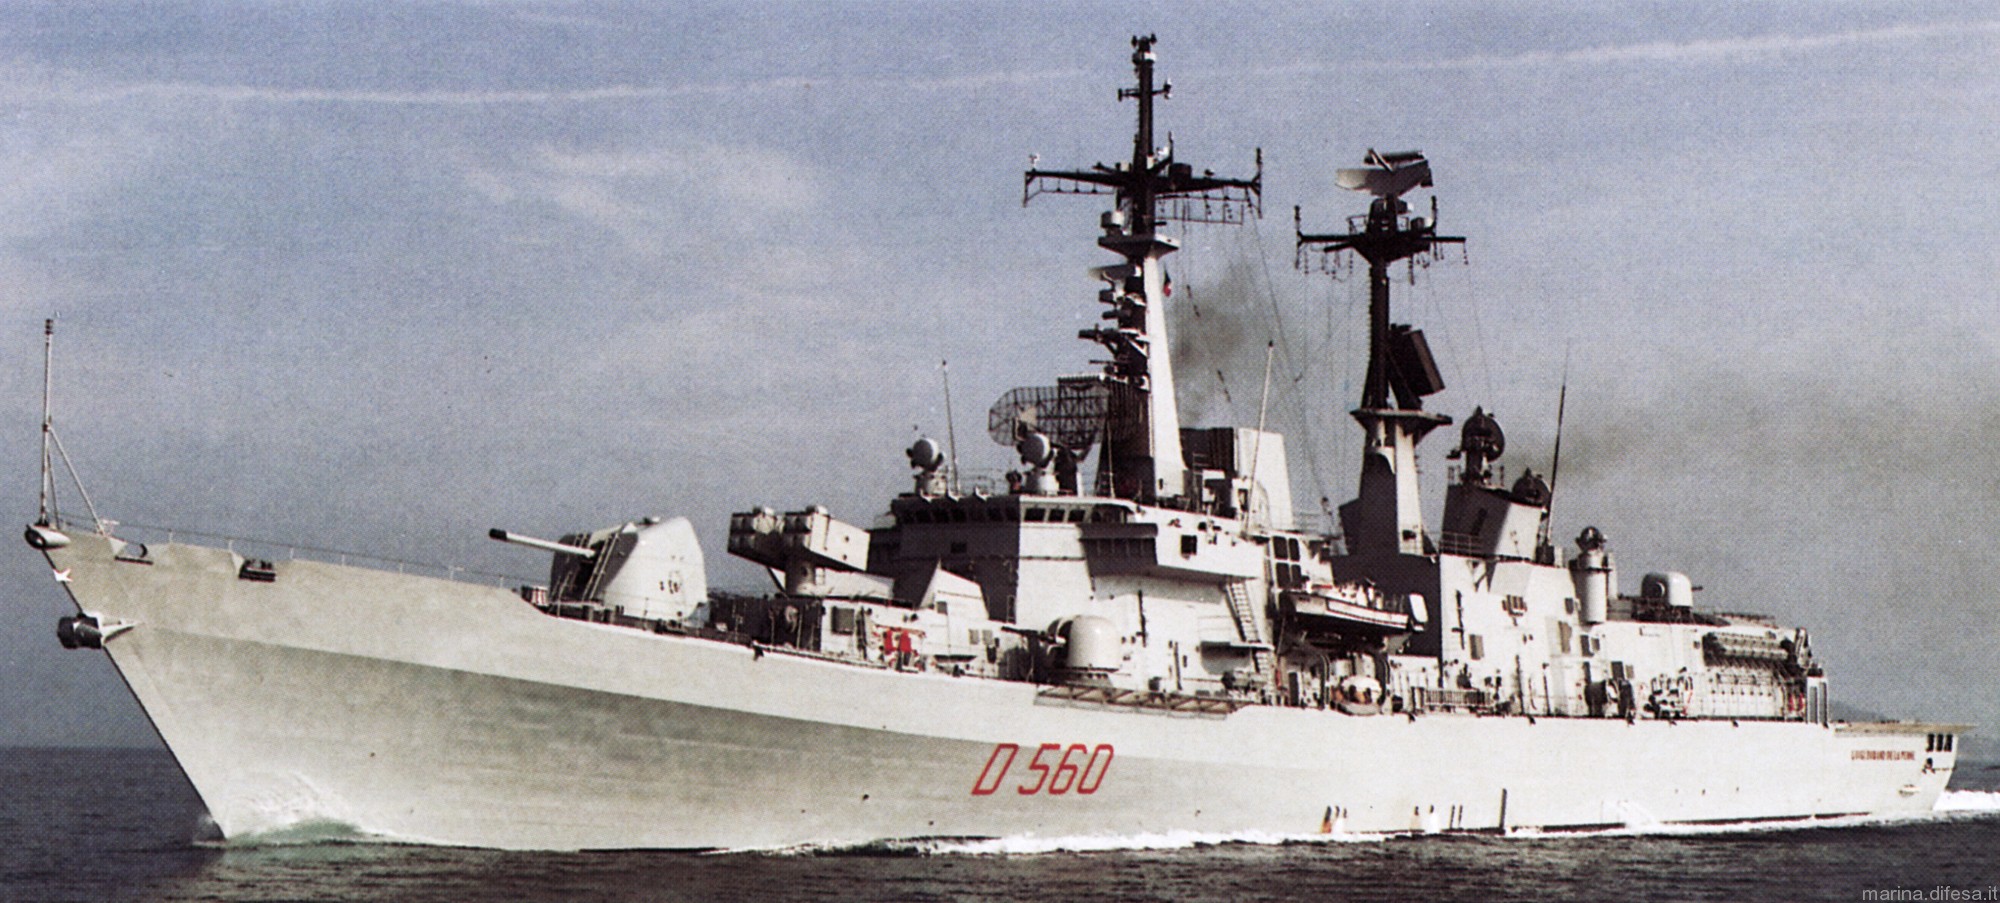 d-560 luigi durand de la penne its nave guided missile destroyer ddg italian navy marina militare 07